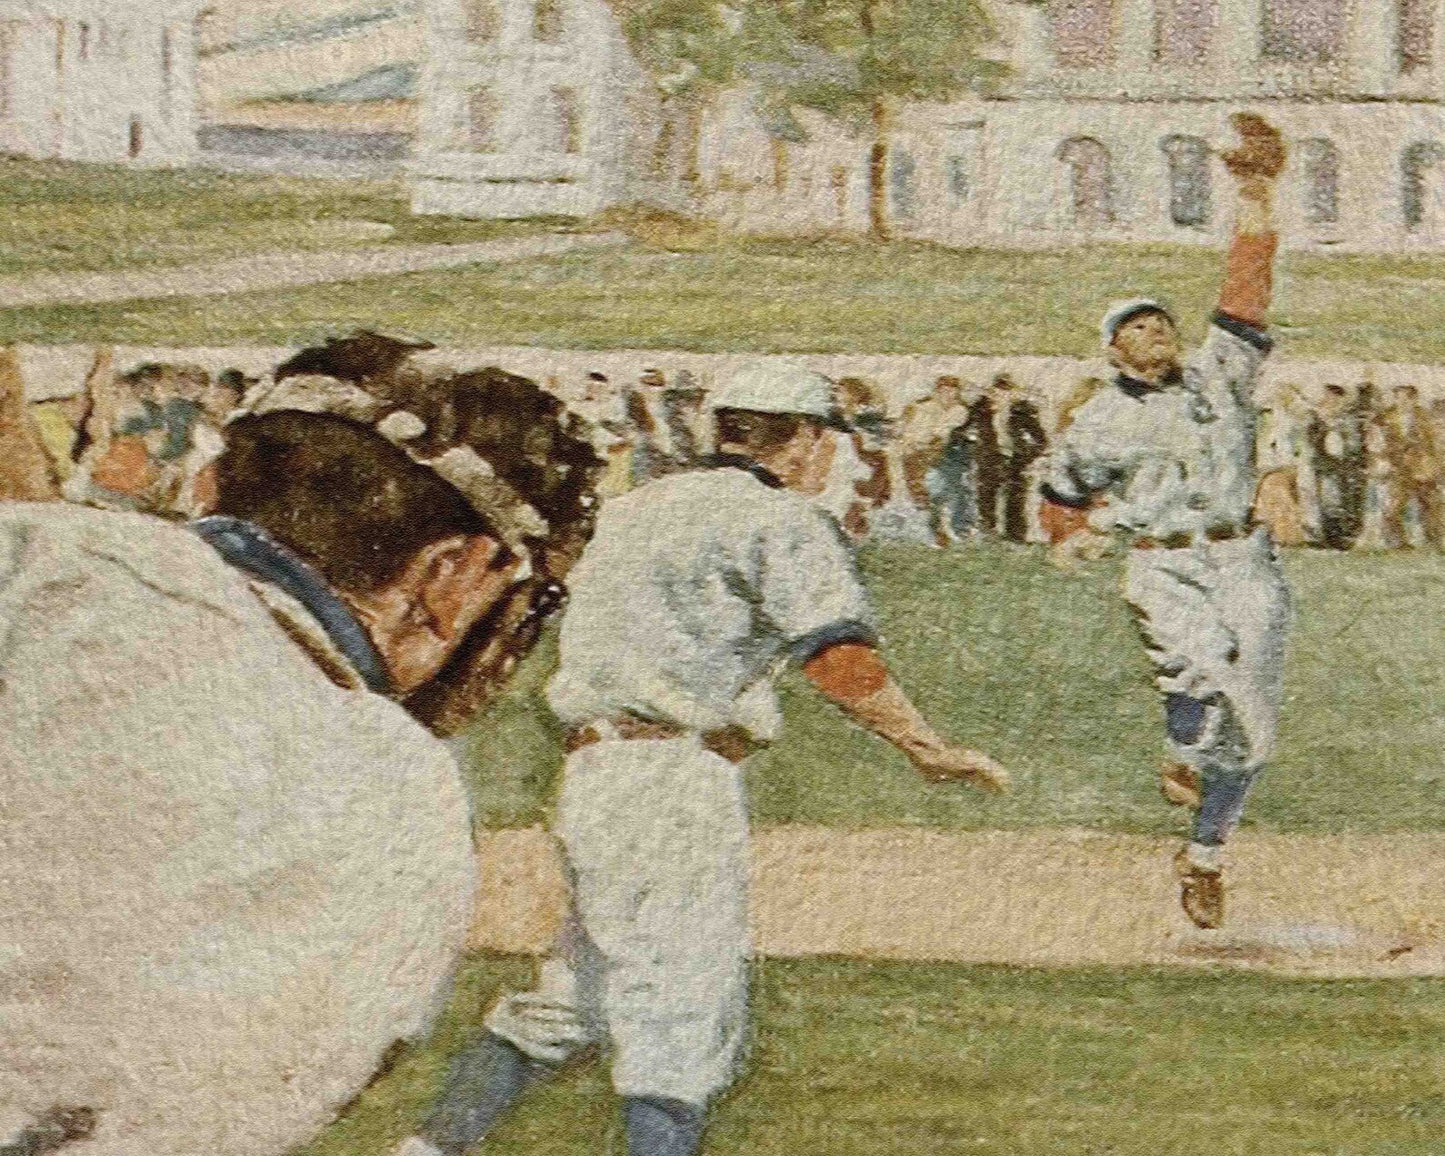 Baseball Art Print Vintage Sports Poster